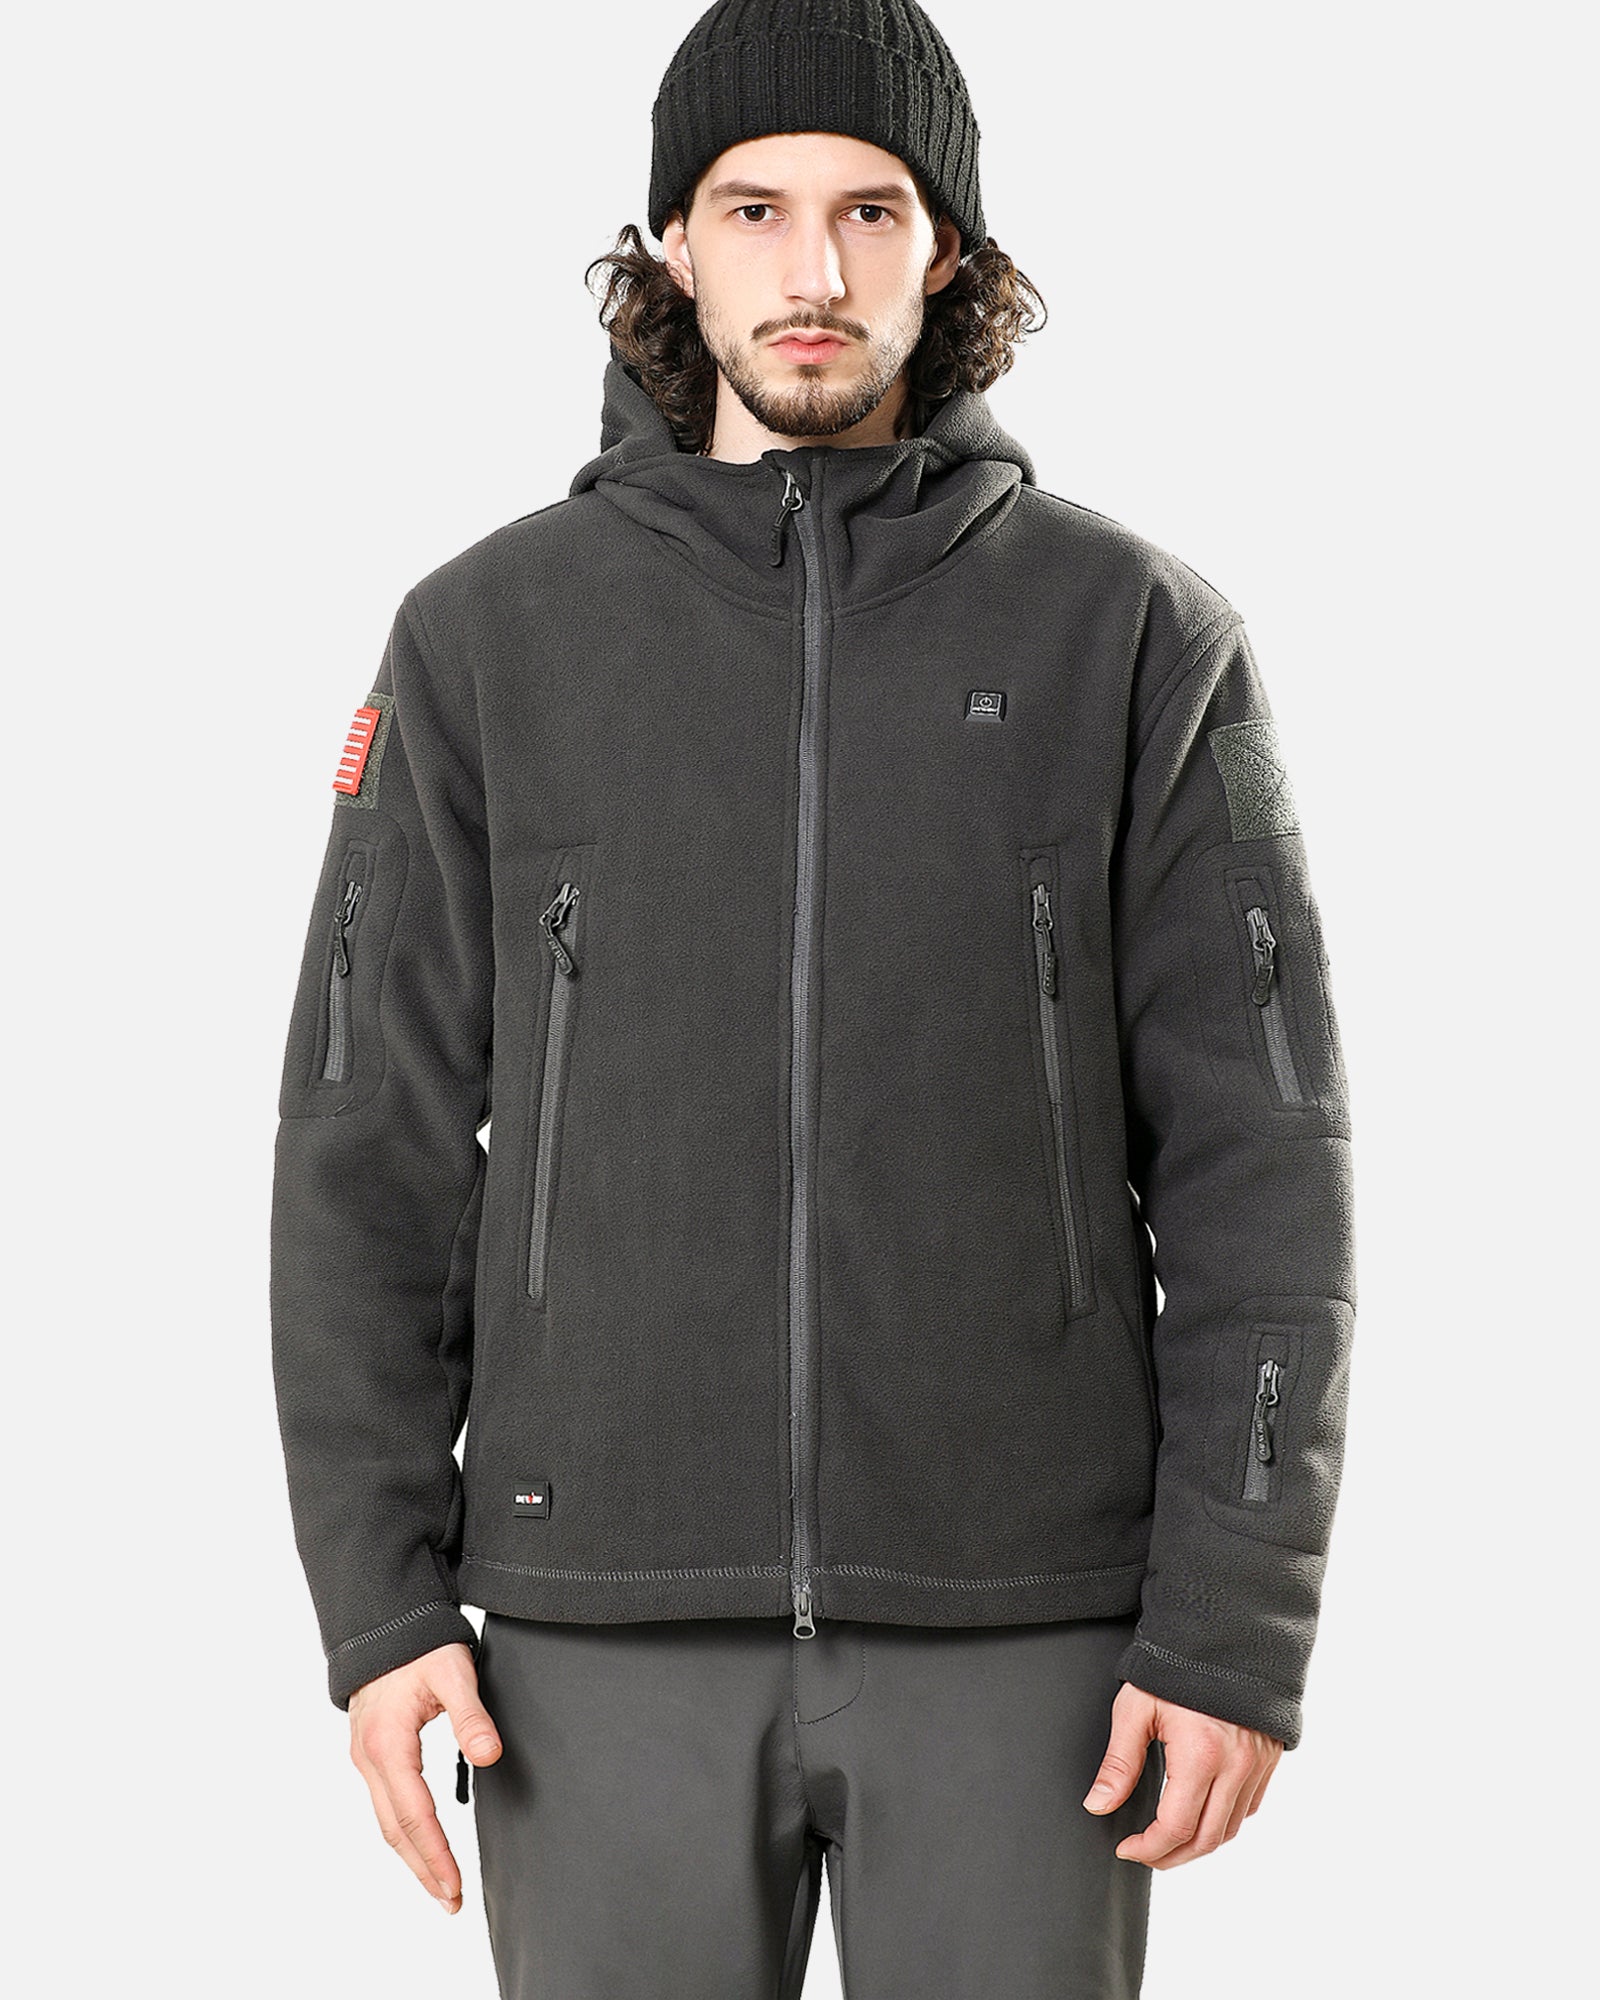 DEWBU® Men's Polar Fleece Heated Jacket With 12V Battery Pack - Grey